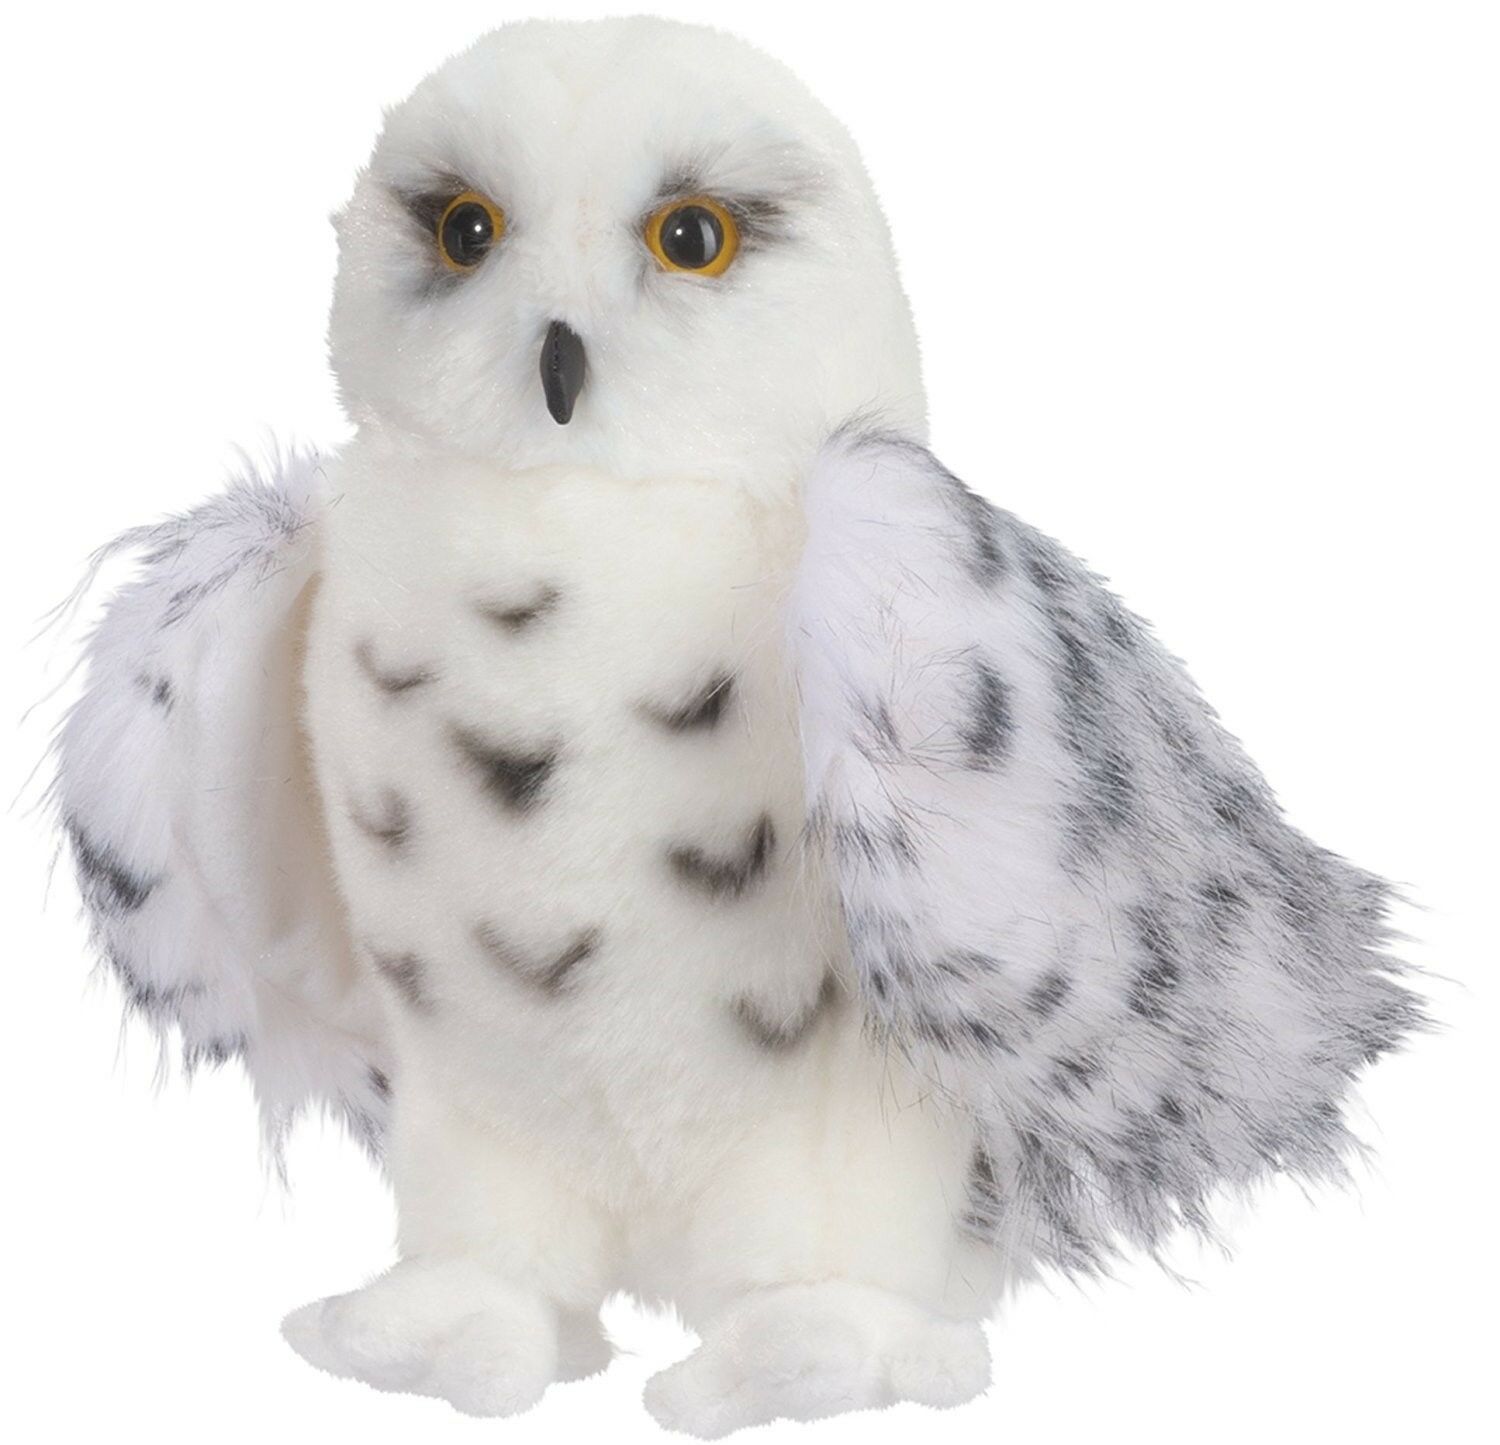 Douglas Cuddle Toys Wizard The Snowy Owl # 3841 Stuffed Animal Toy